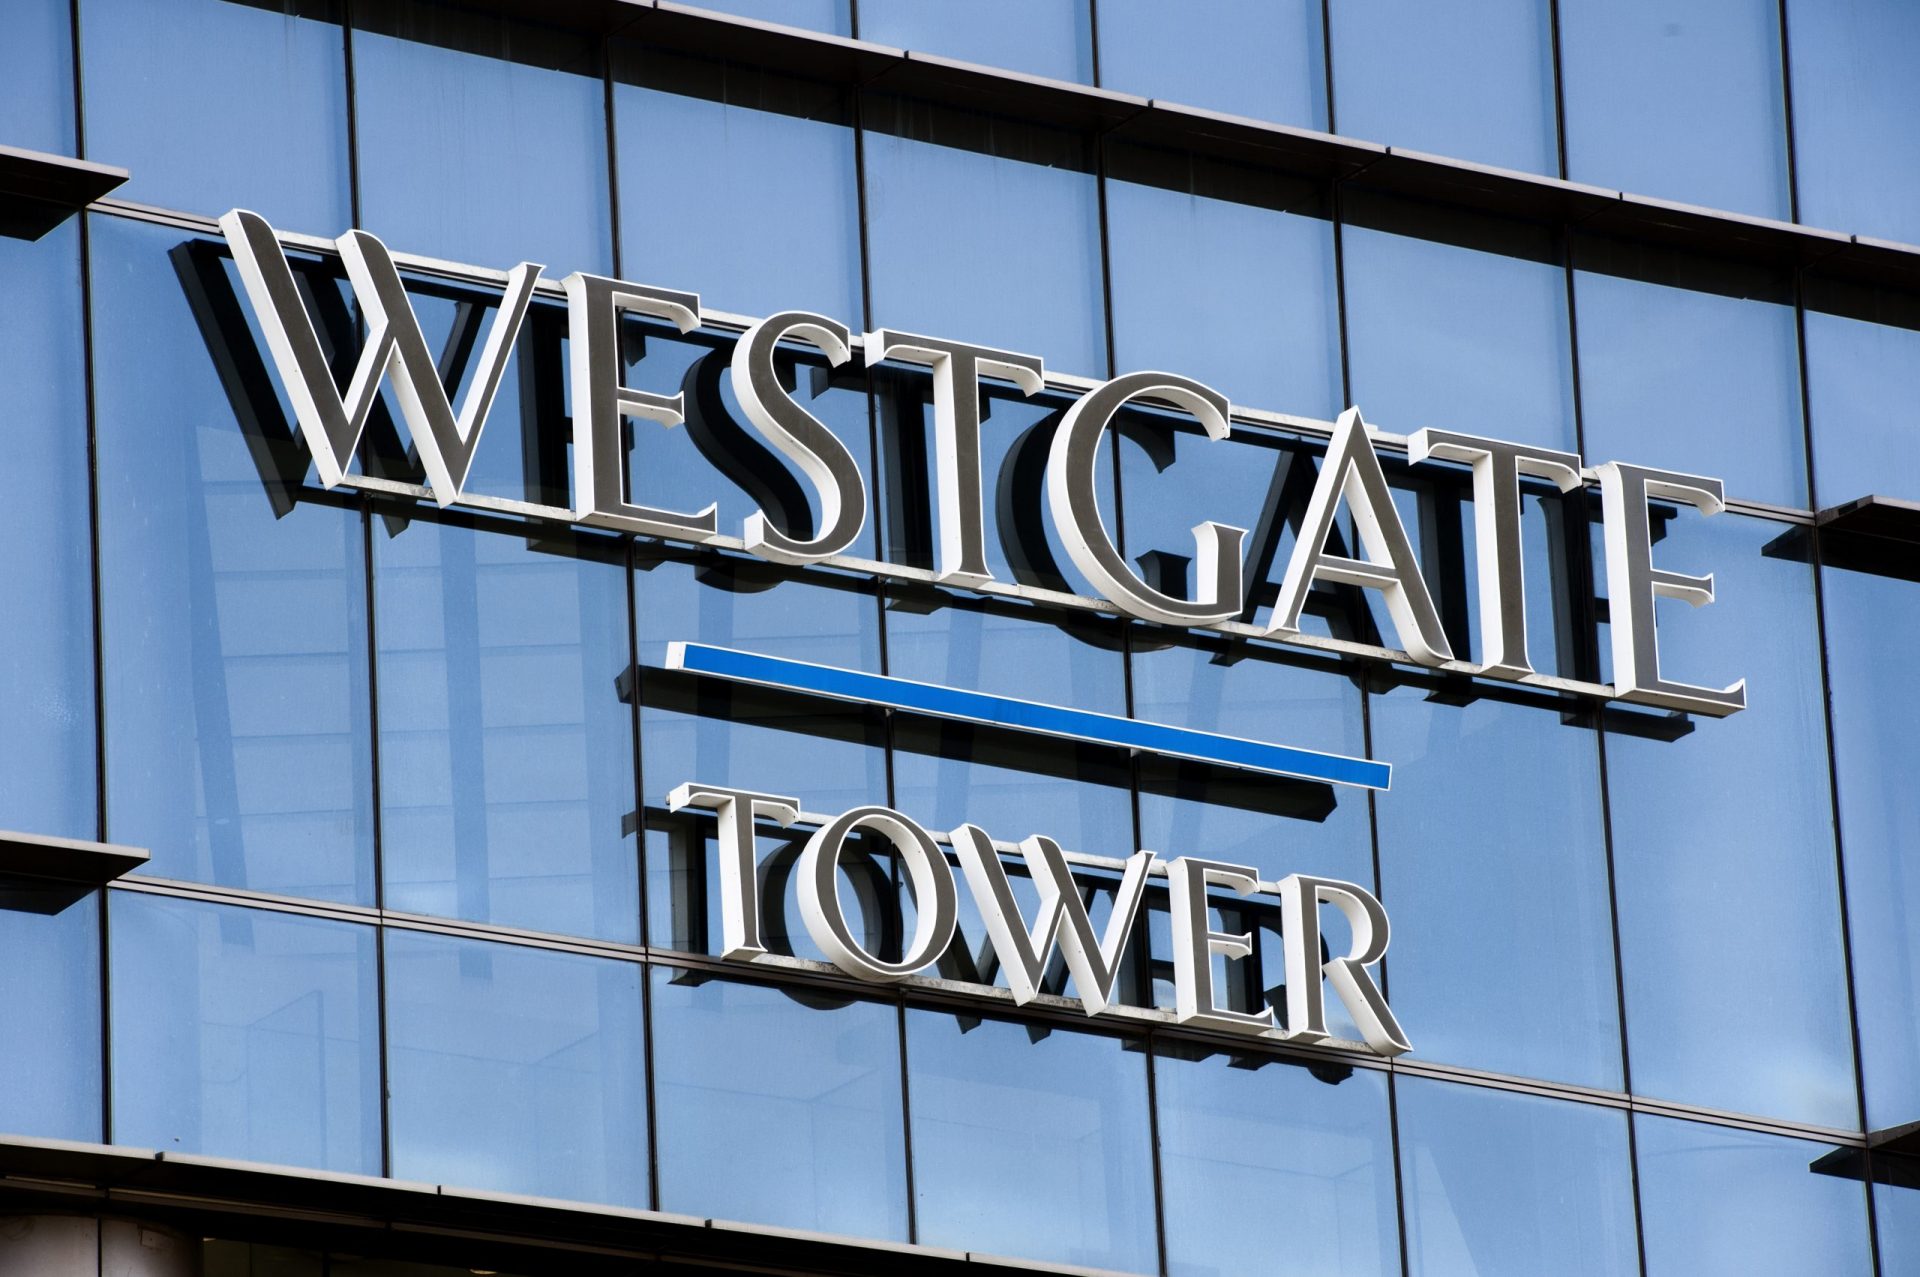 Sun Venture Westgate Tower - Facade